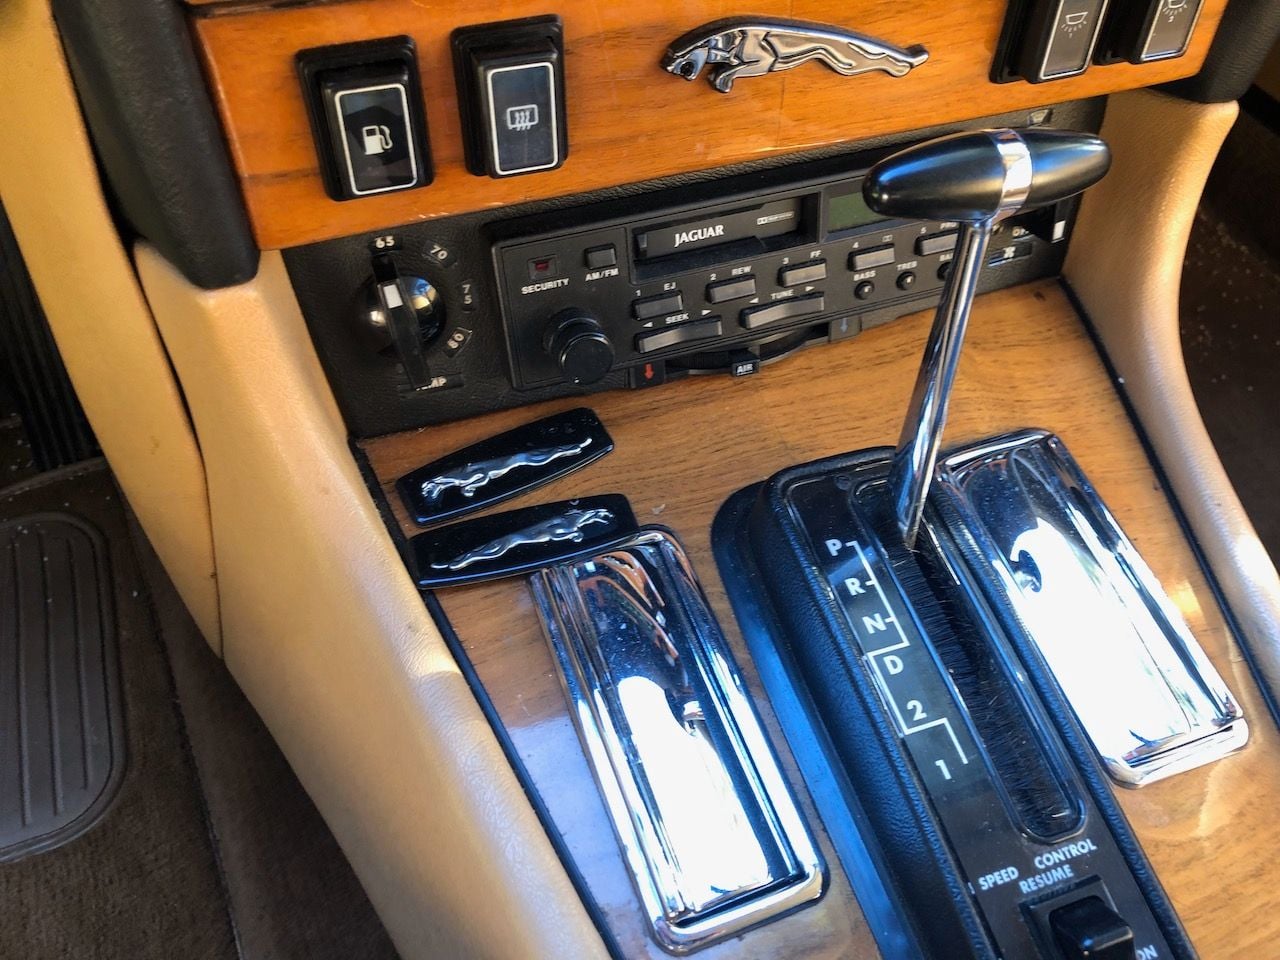 1987 Jaguar XJ6 - Nice condition, running, classic beauty - Used - VIN SAJAV1342HC466857 - 113,800 Miles - 6 cyl - 2WD - Automatic - Sedan - Blue - Weston, MA 02493, United States